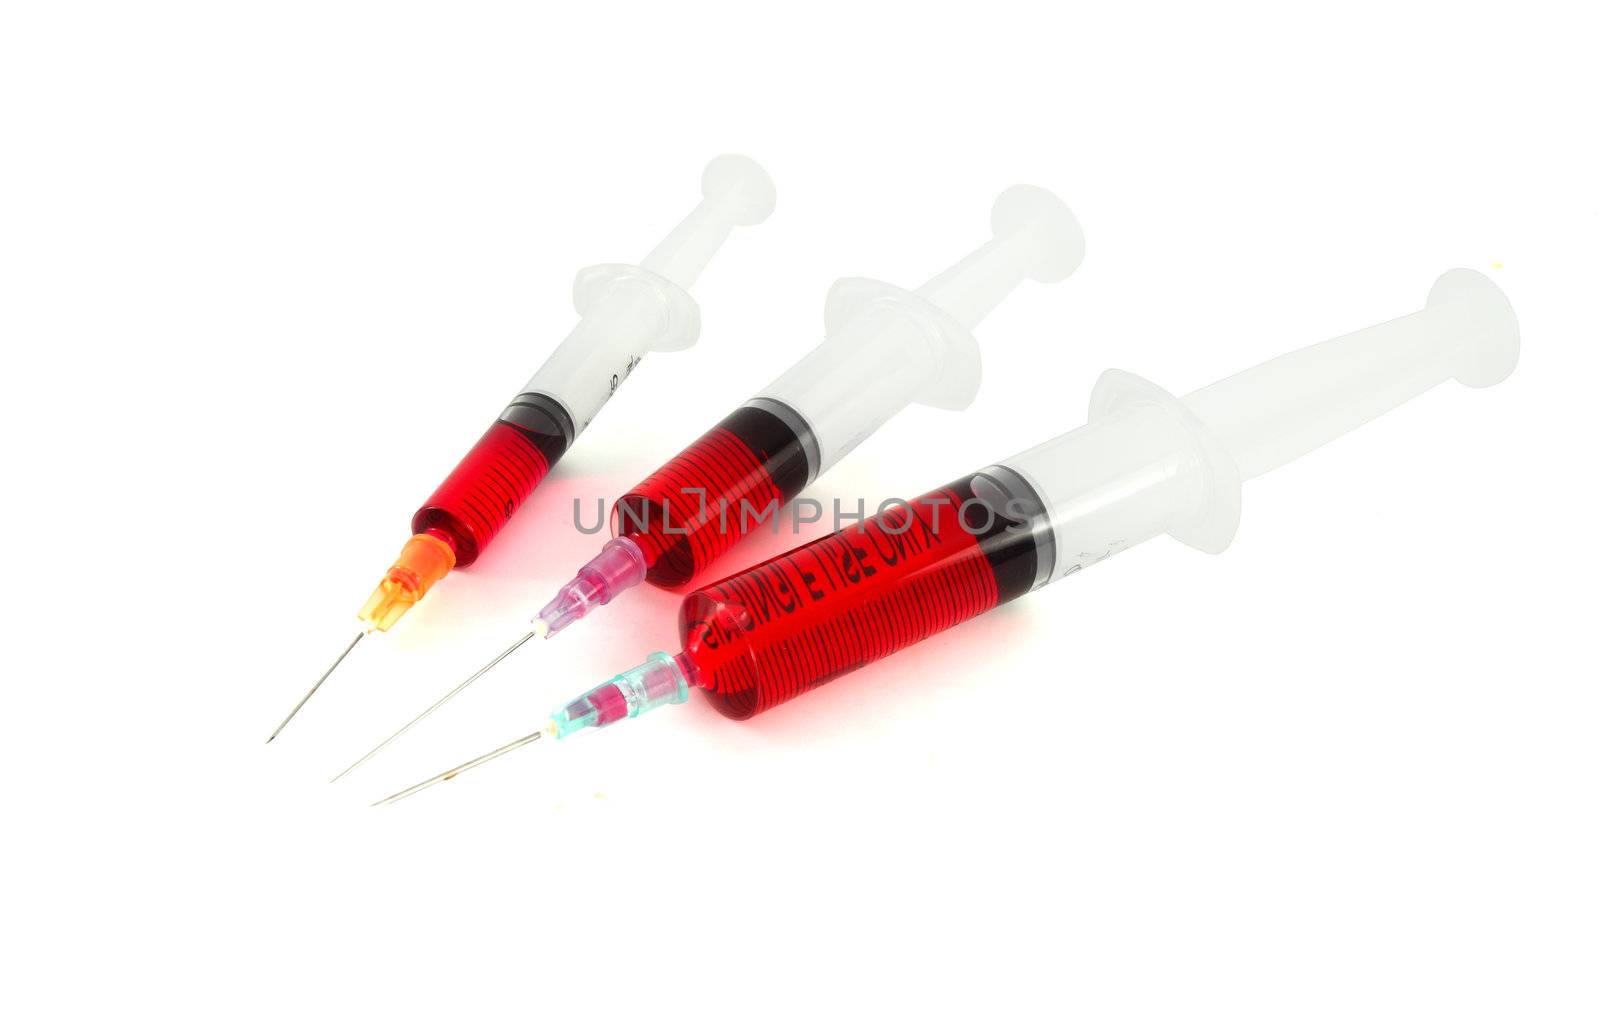 Three syringe against white background by geargodz